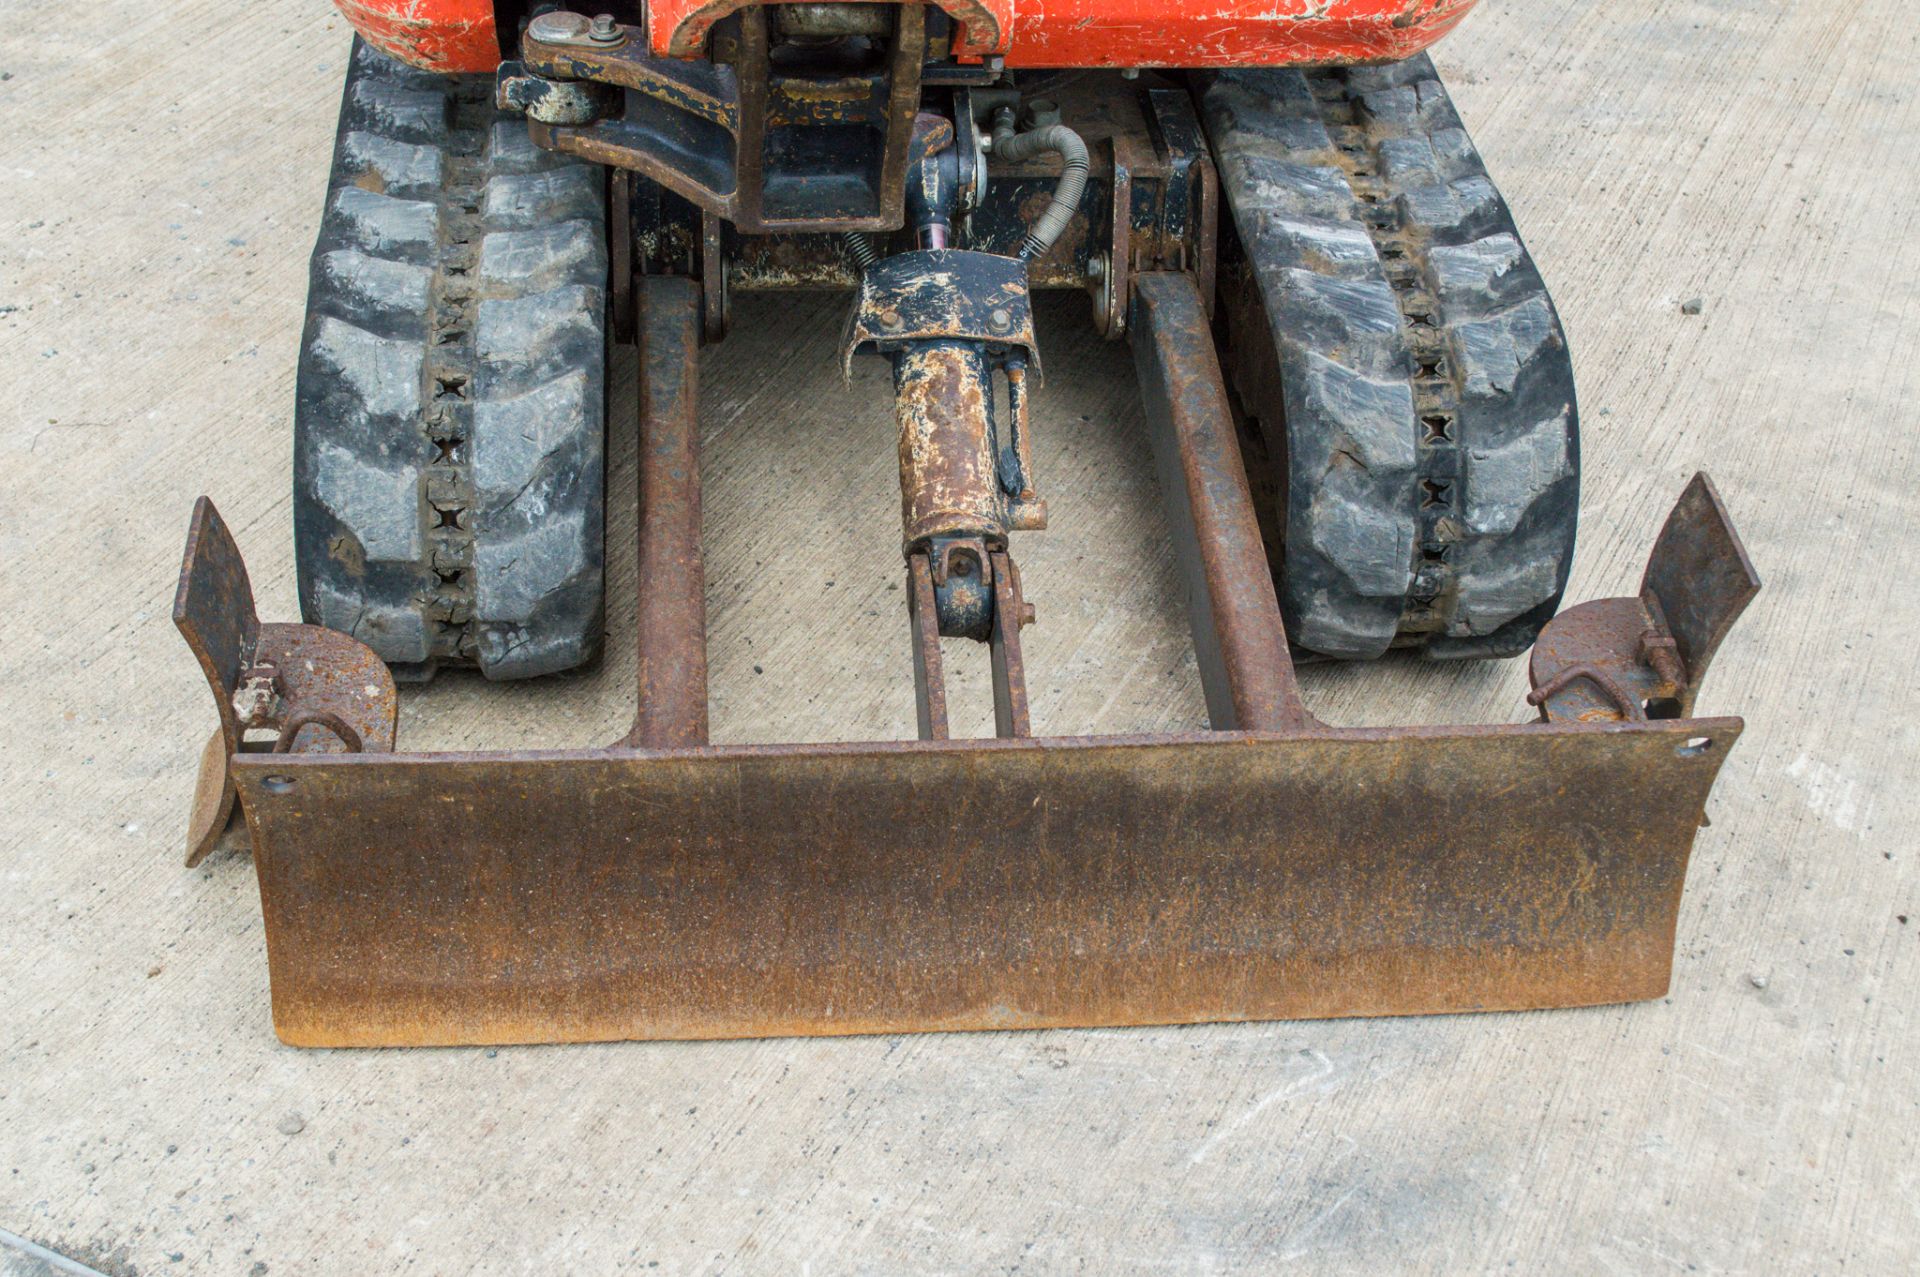 Kubota U17-3a 1.6 tonne rubber tracked mini excavator  Year: 2014 S/N: 21778 Recorded Hours: 2898 - Image 14 of 25